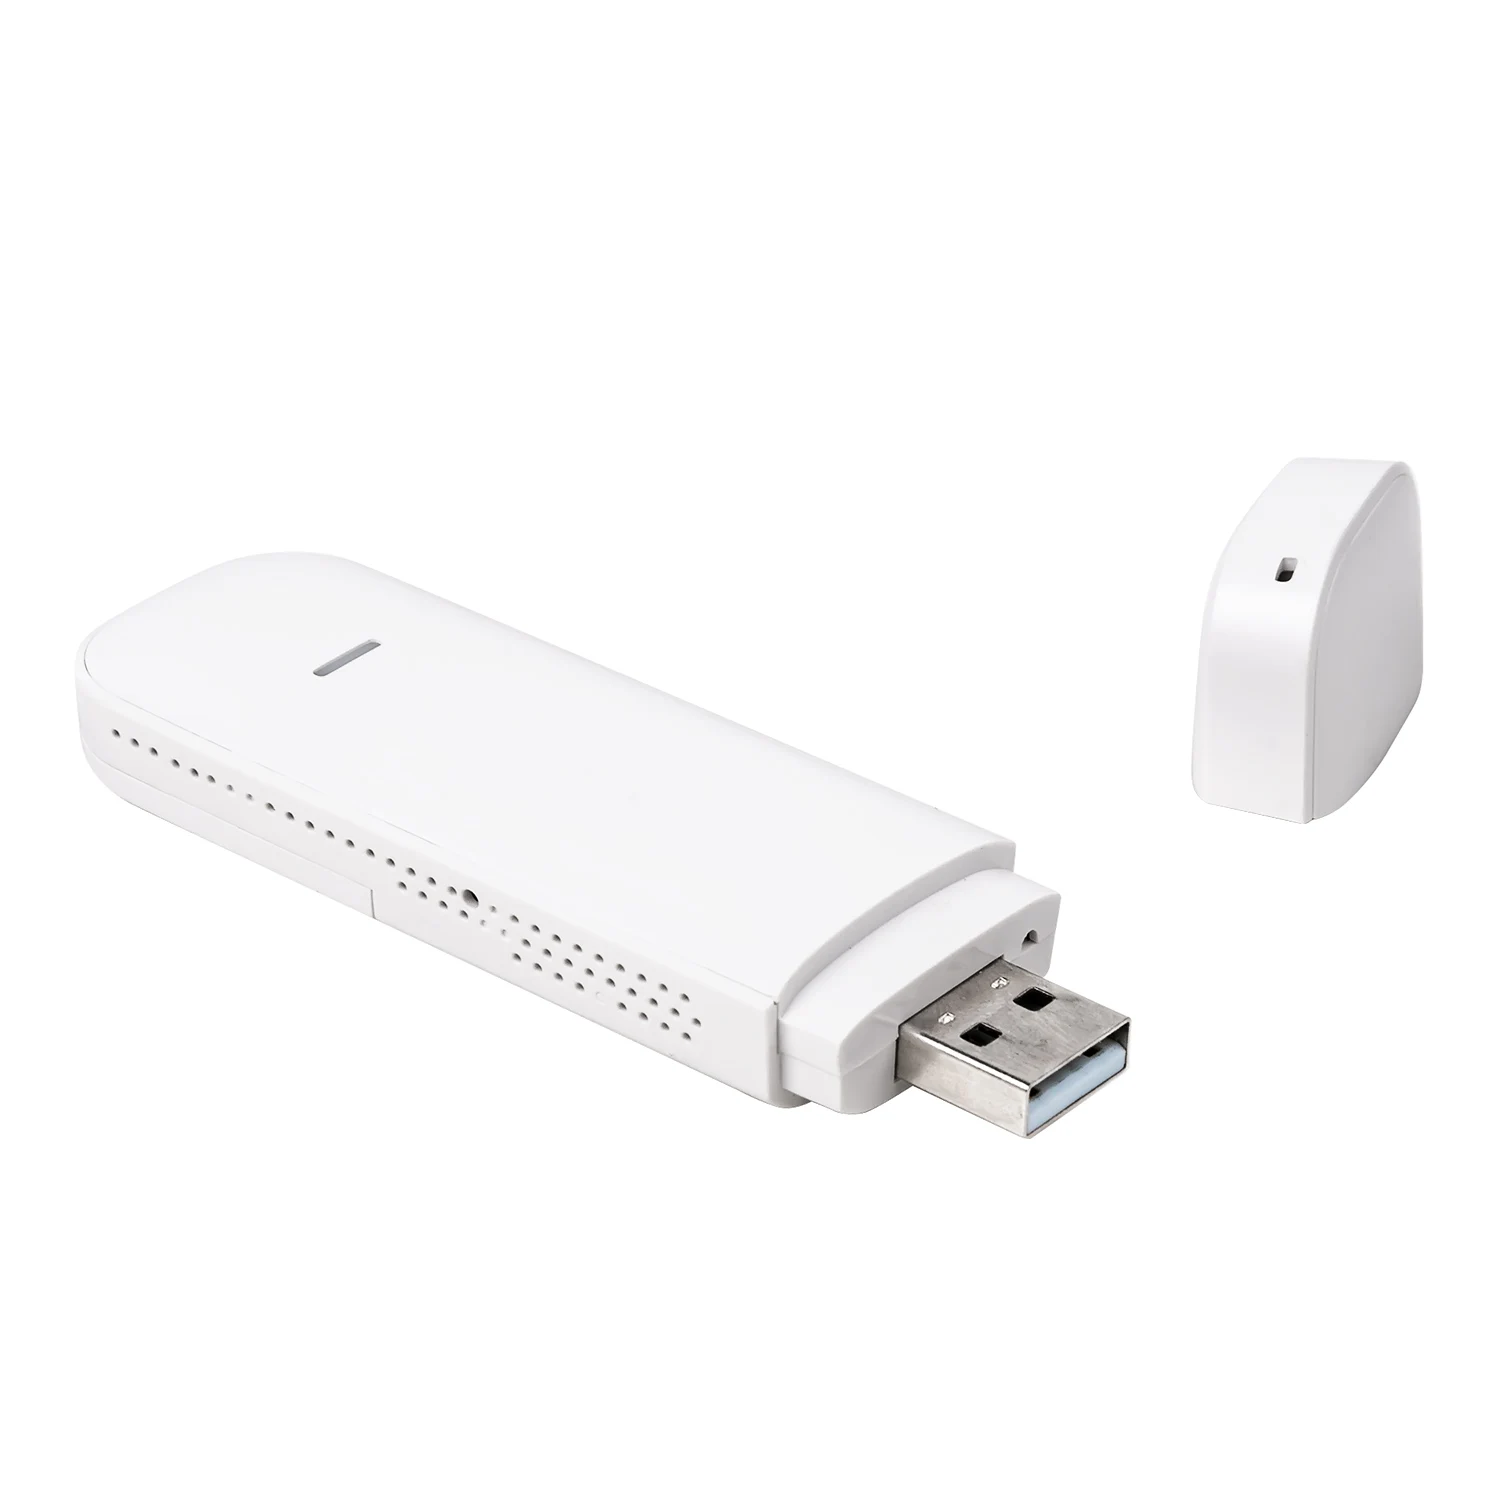 

TUOSHI unlocked mini 4G Dongle USB LTE Ufi mobile data wireless router Network Card wifi hotspot modem dongle with Sim Card slot